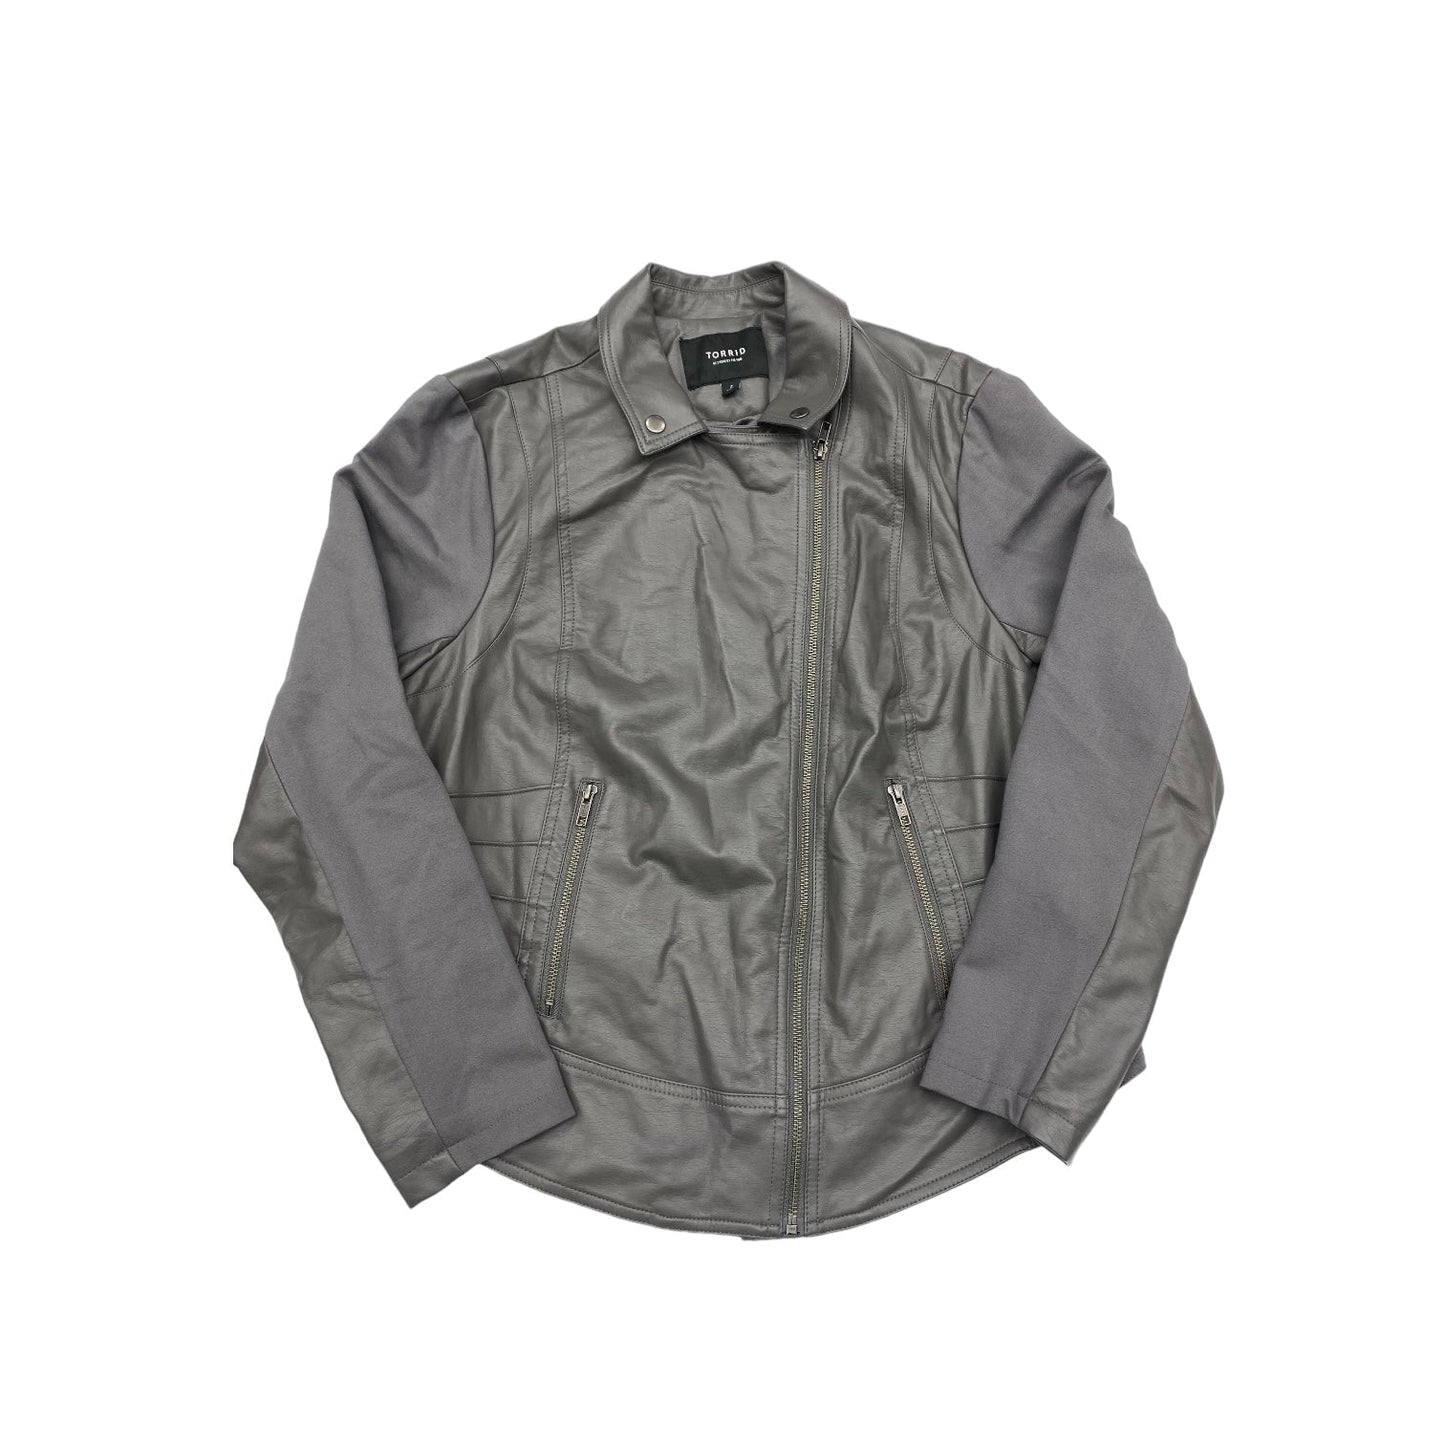 Grey Jacket Moto Torrid, Size 2x